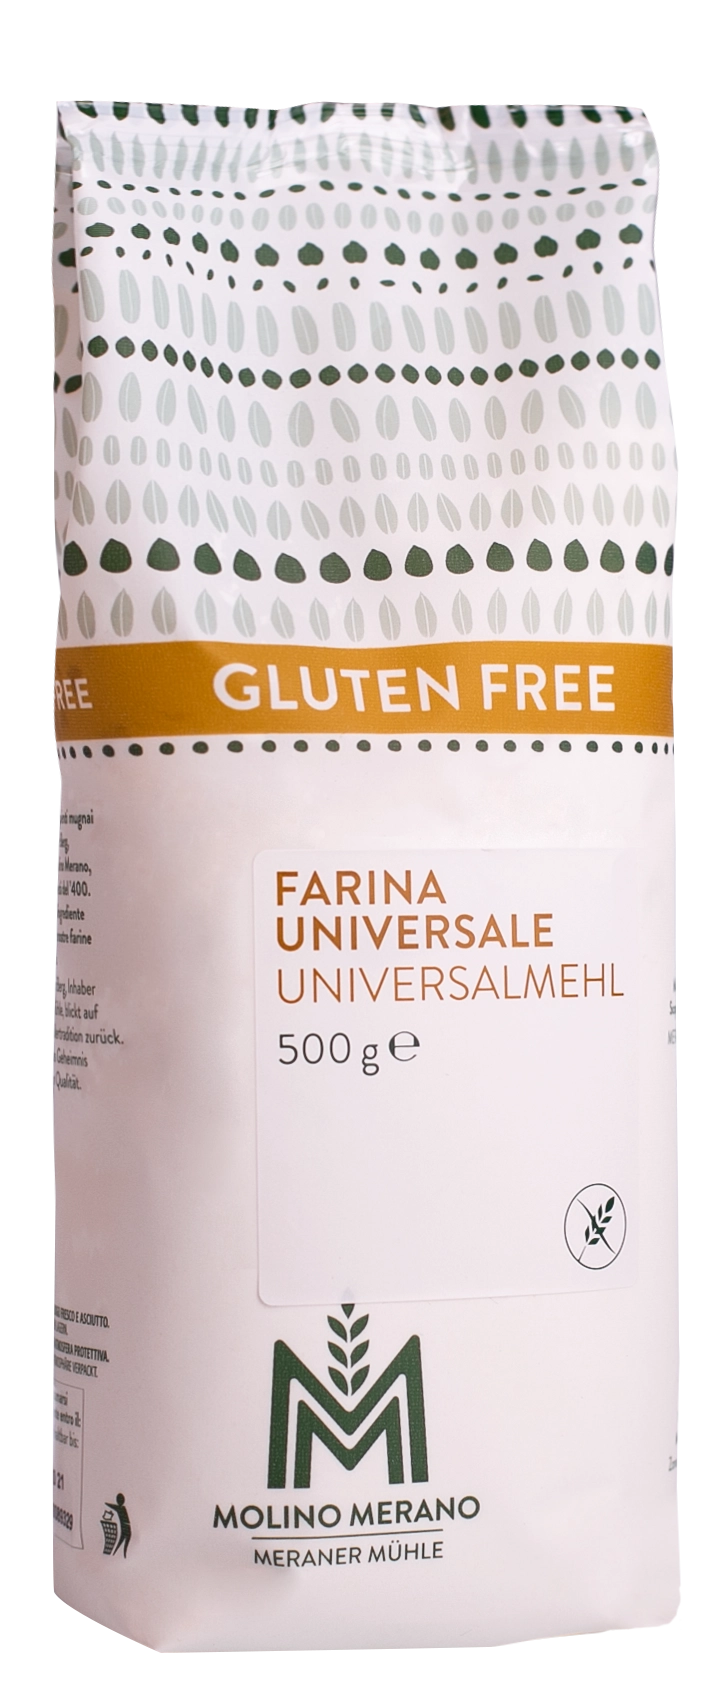 All-purpose flour gluten free